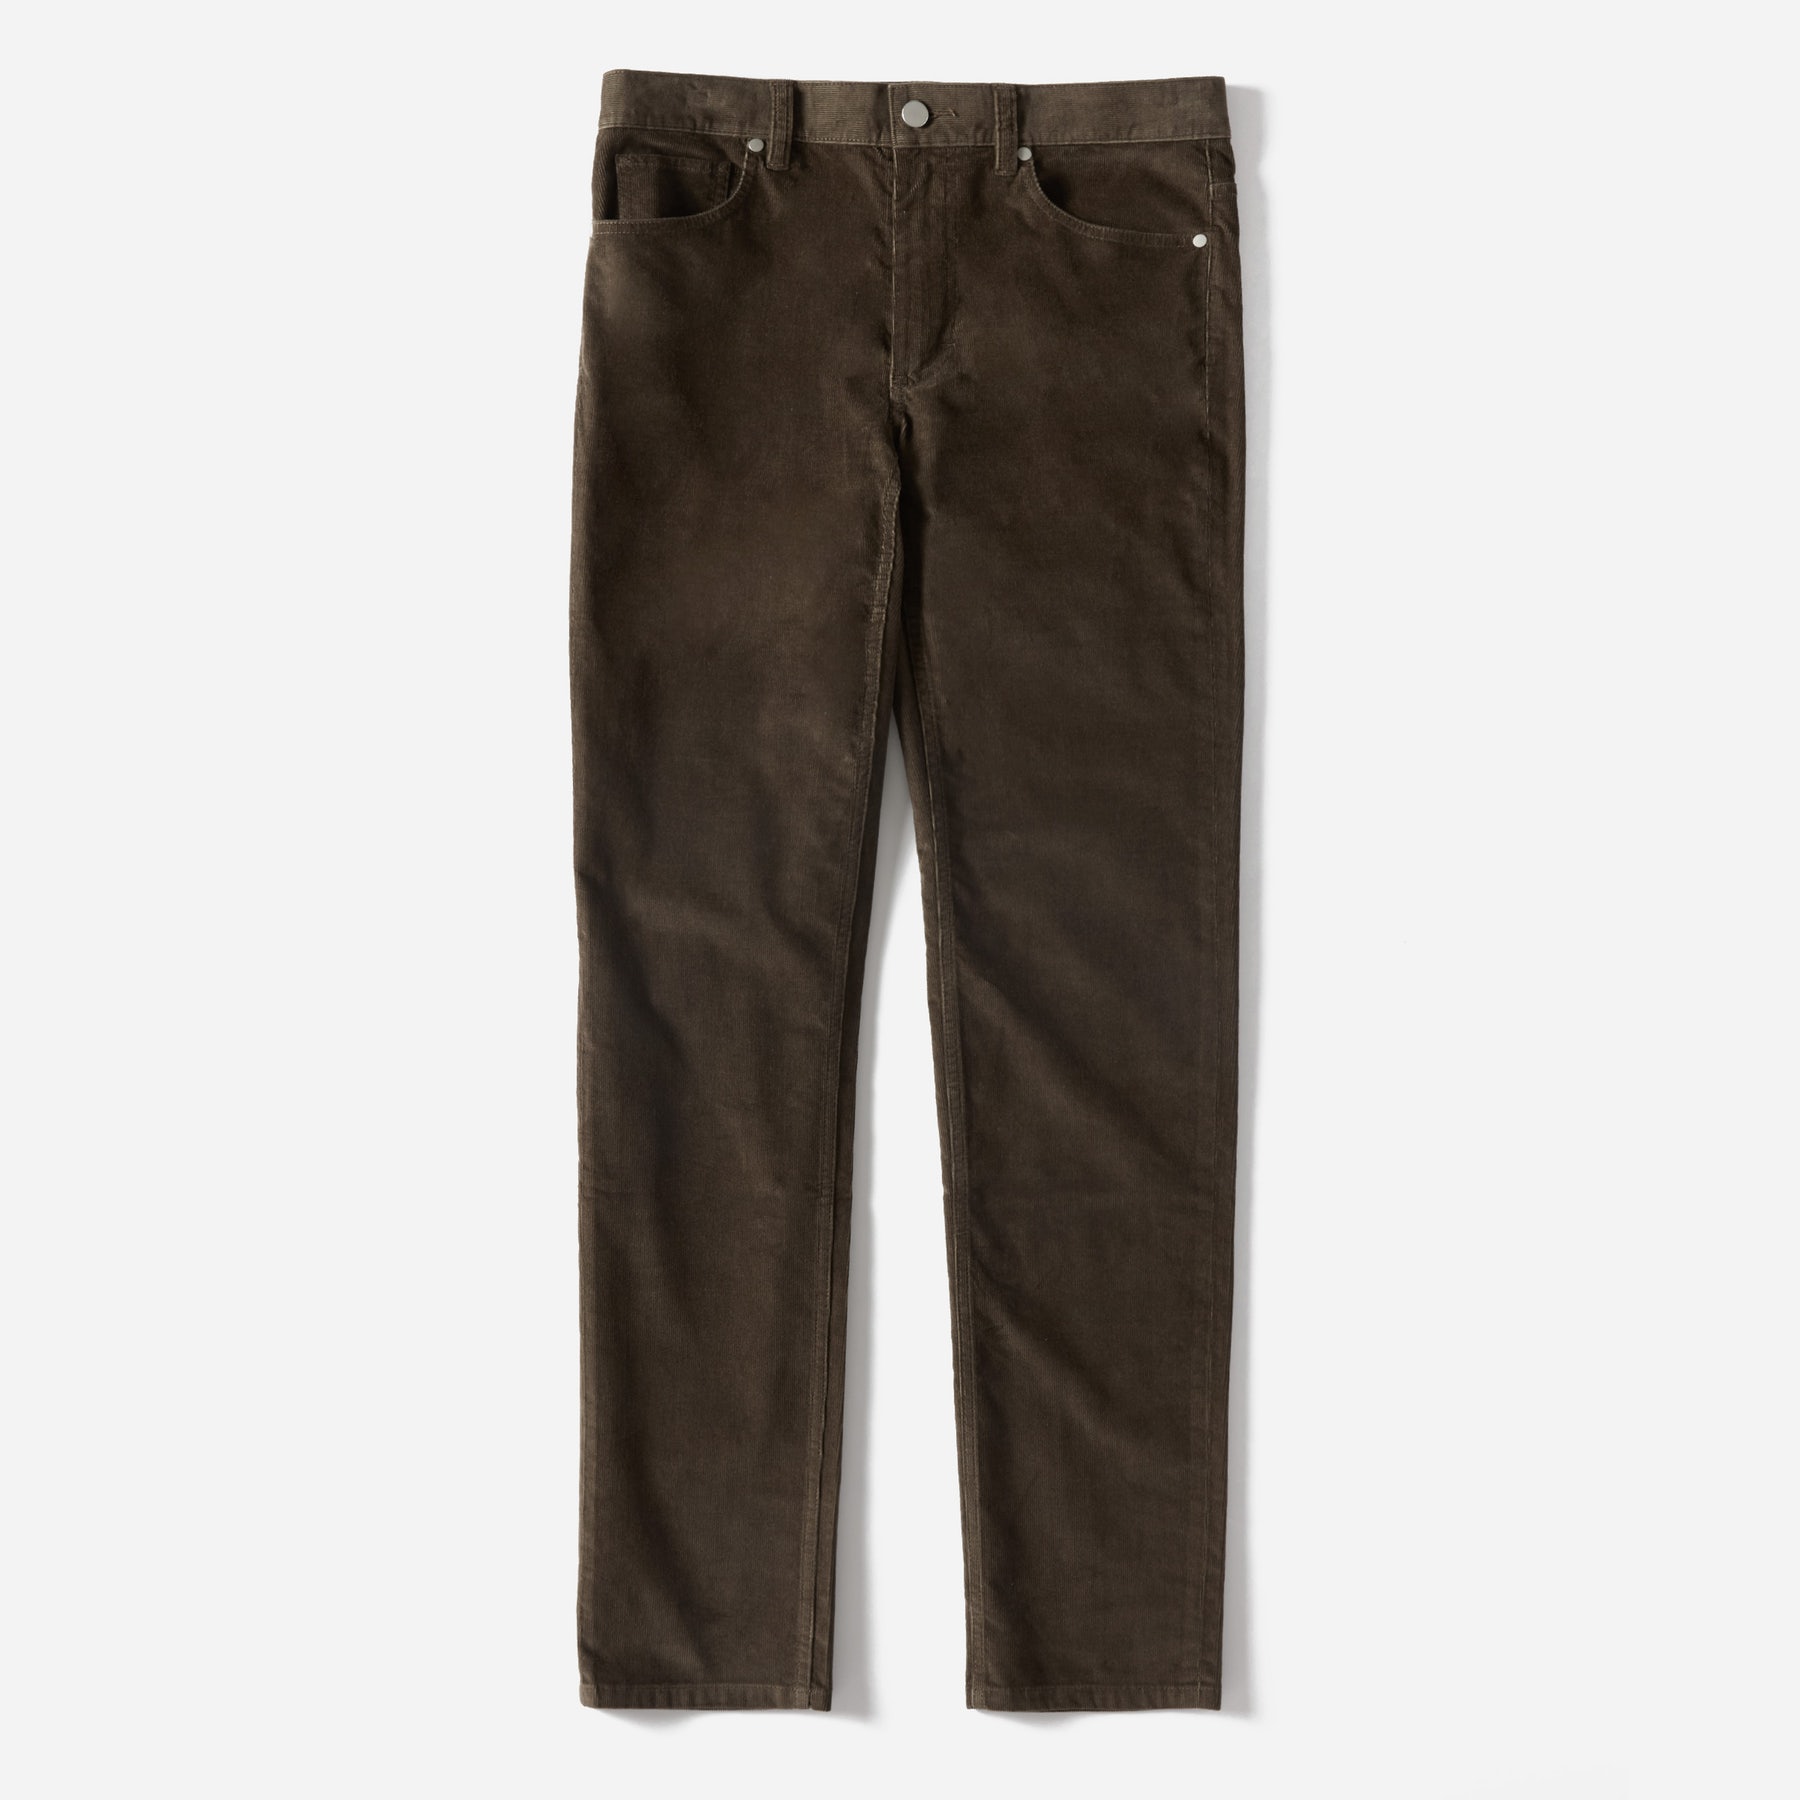 Everlane Corduroy 5-Pocket Slim Pant